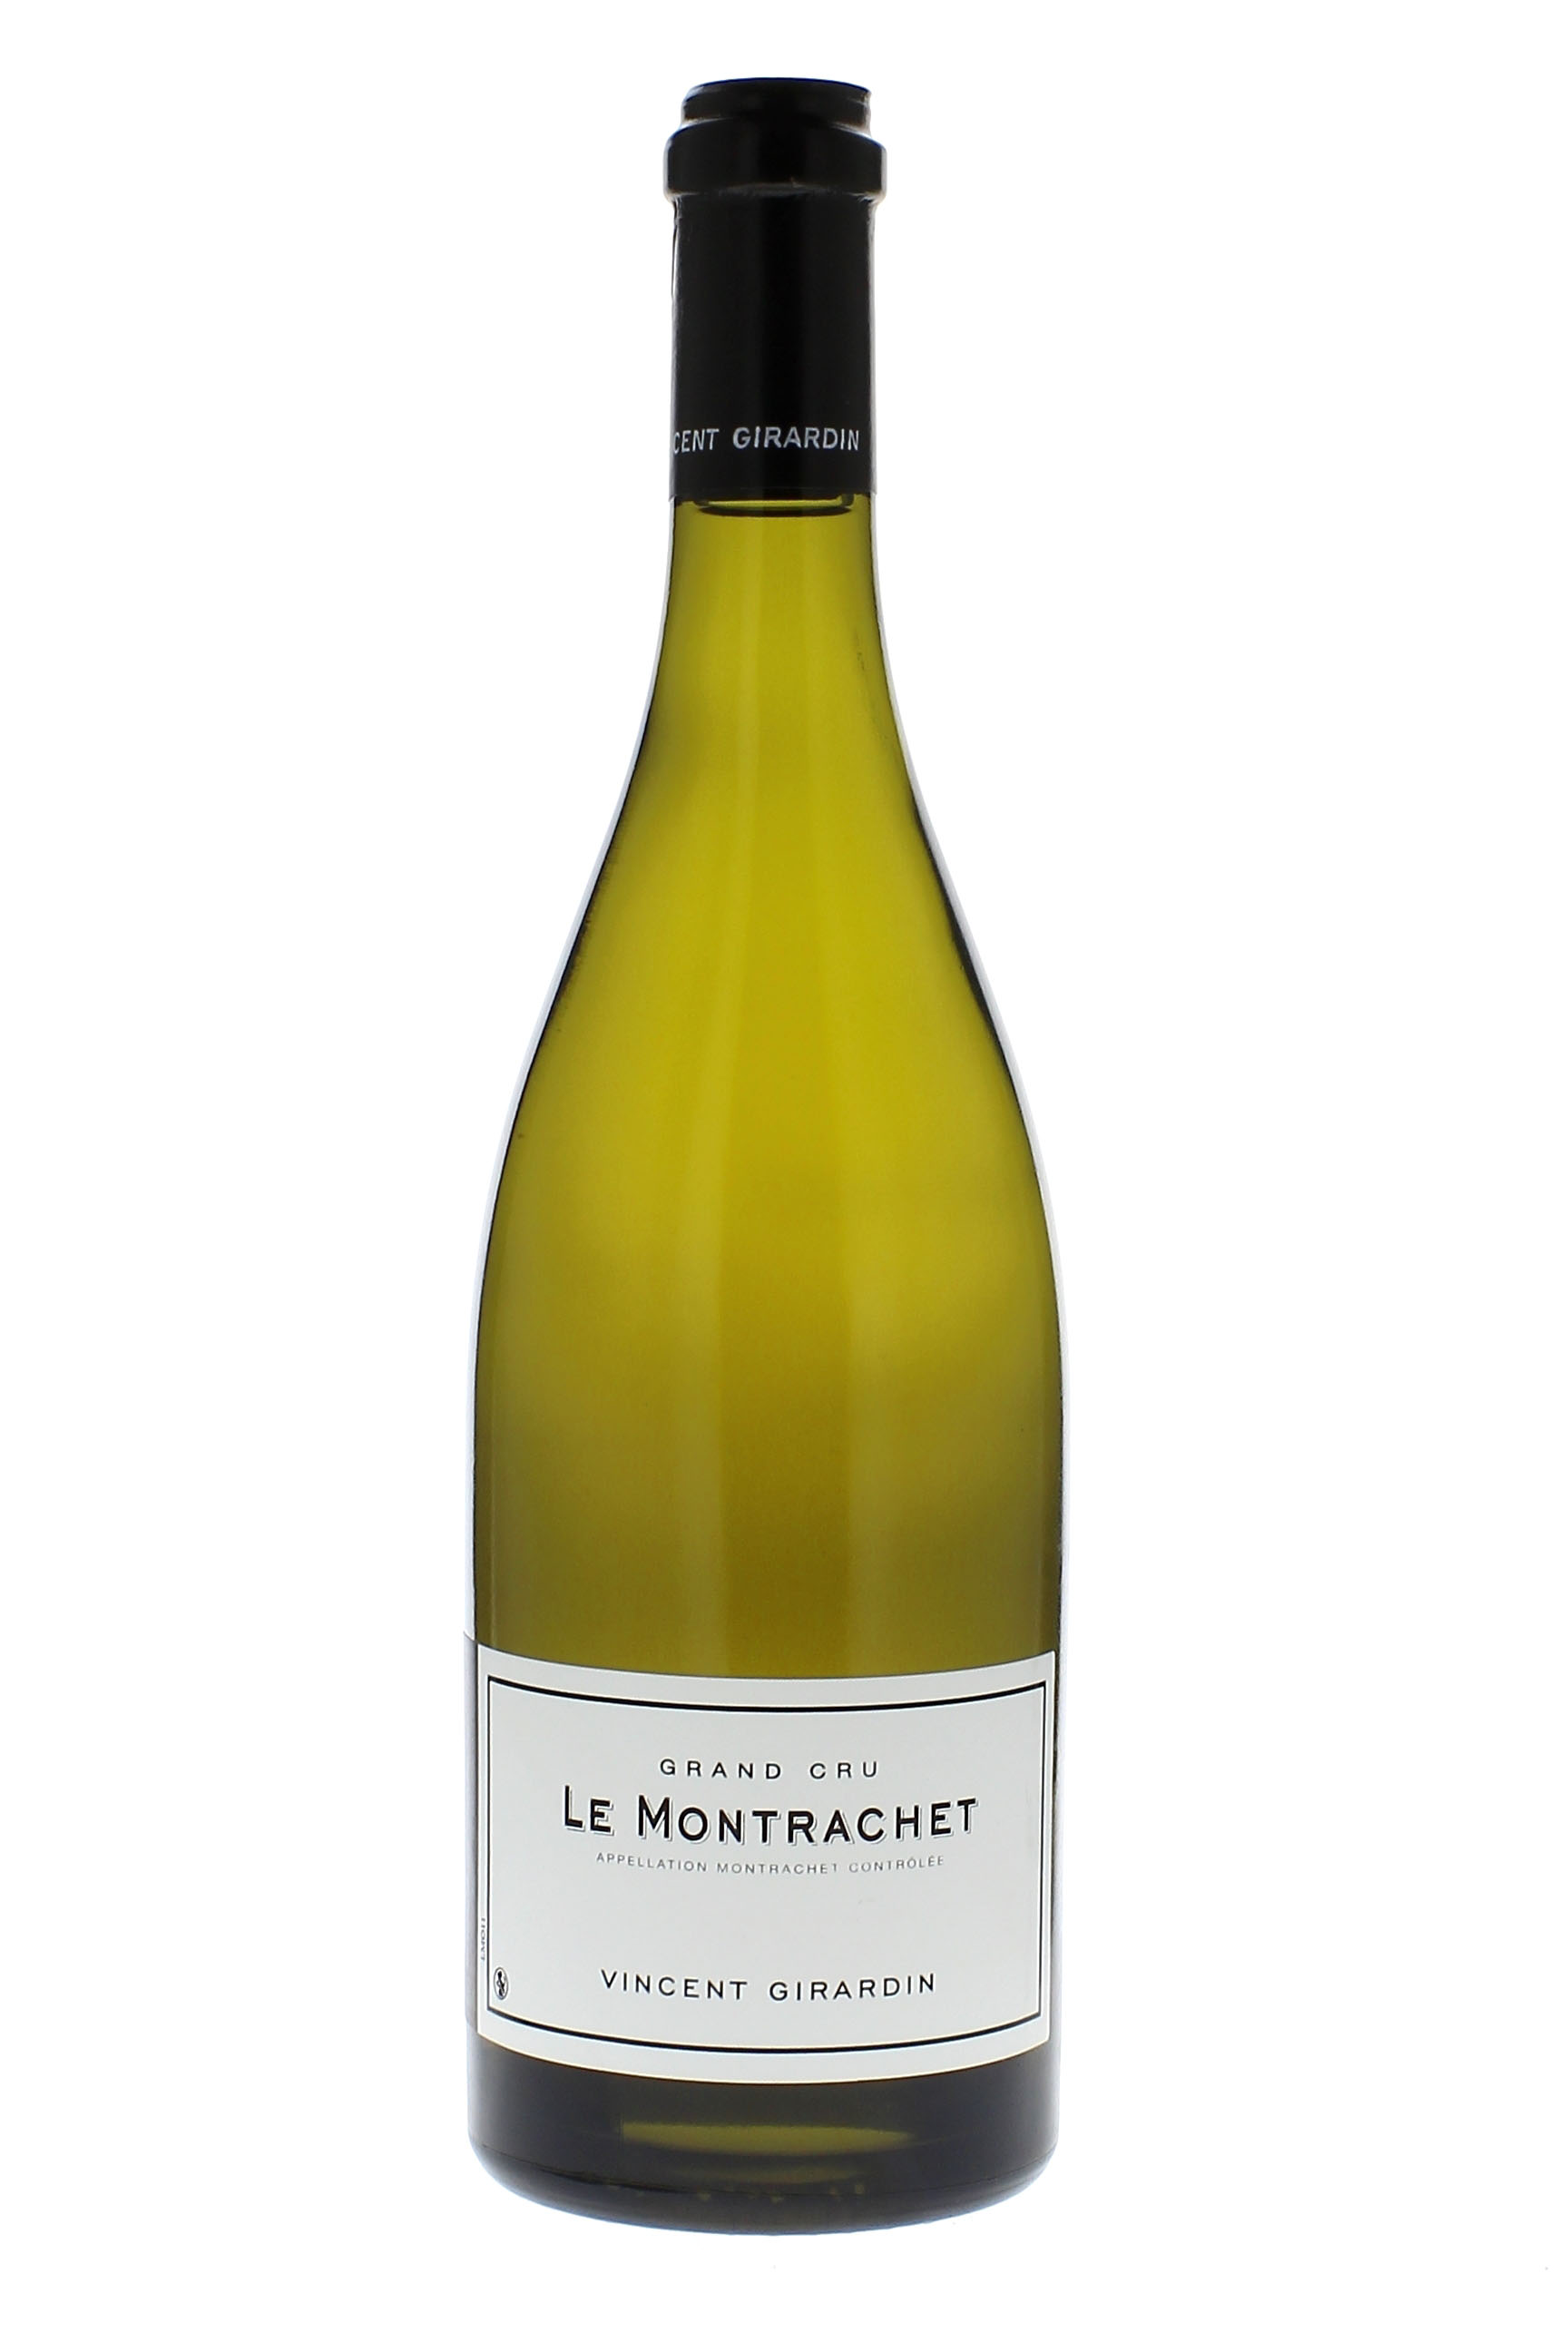 Montrachet grand cru 2015 Domaine GIRARDIN Vincent, Bourgogne blanc